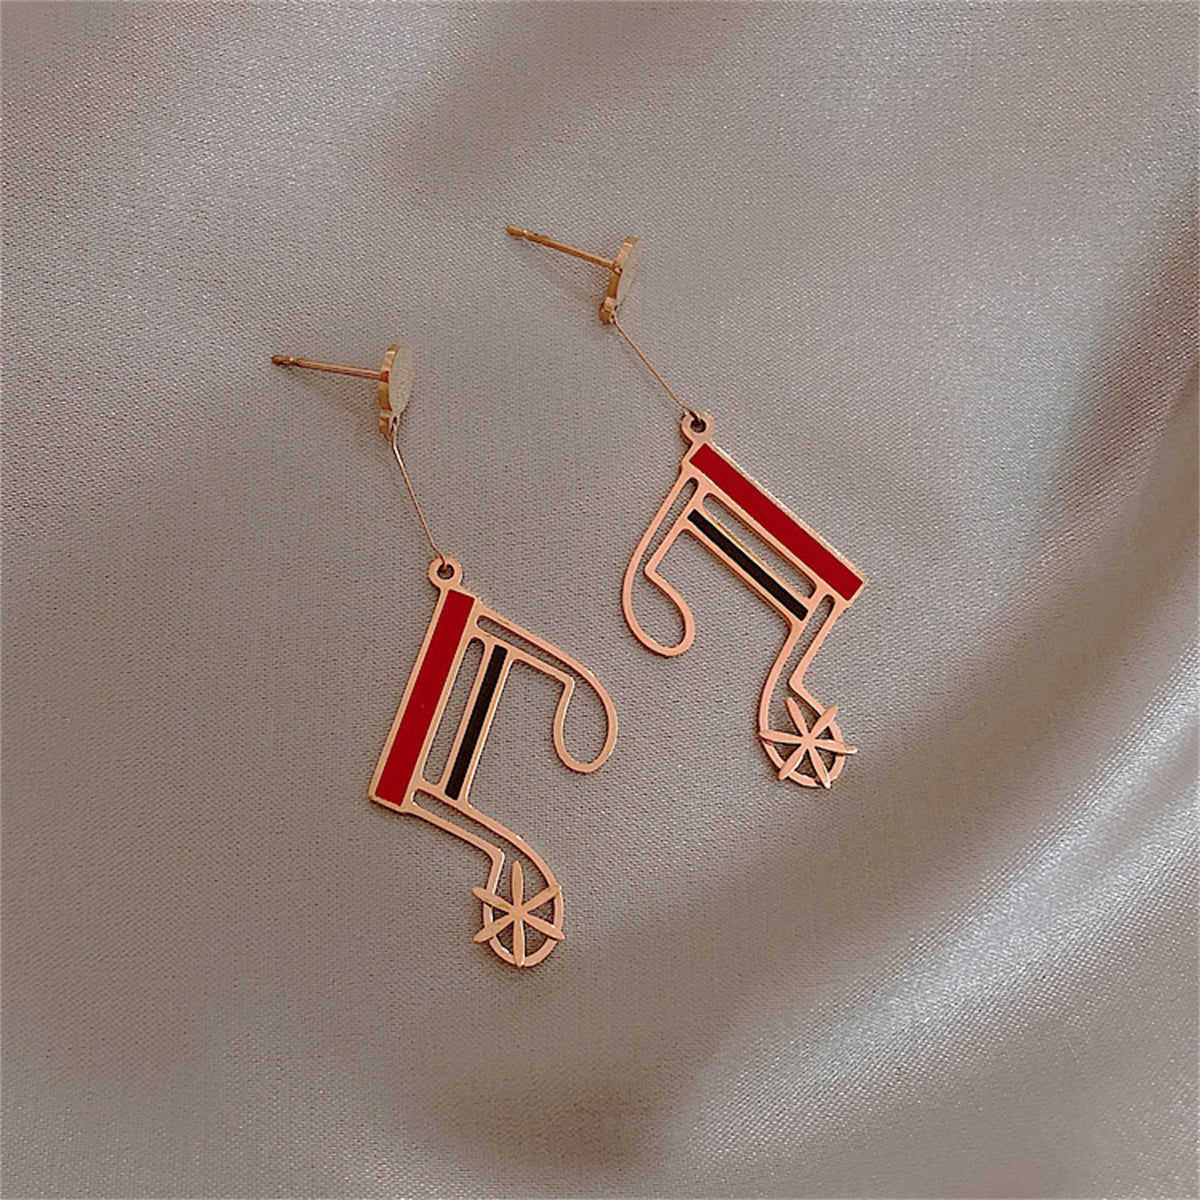 Red & Black Enamel 18K Rose Gold-Plated Musical Note Drop Earrings